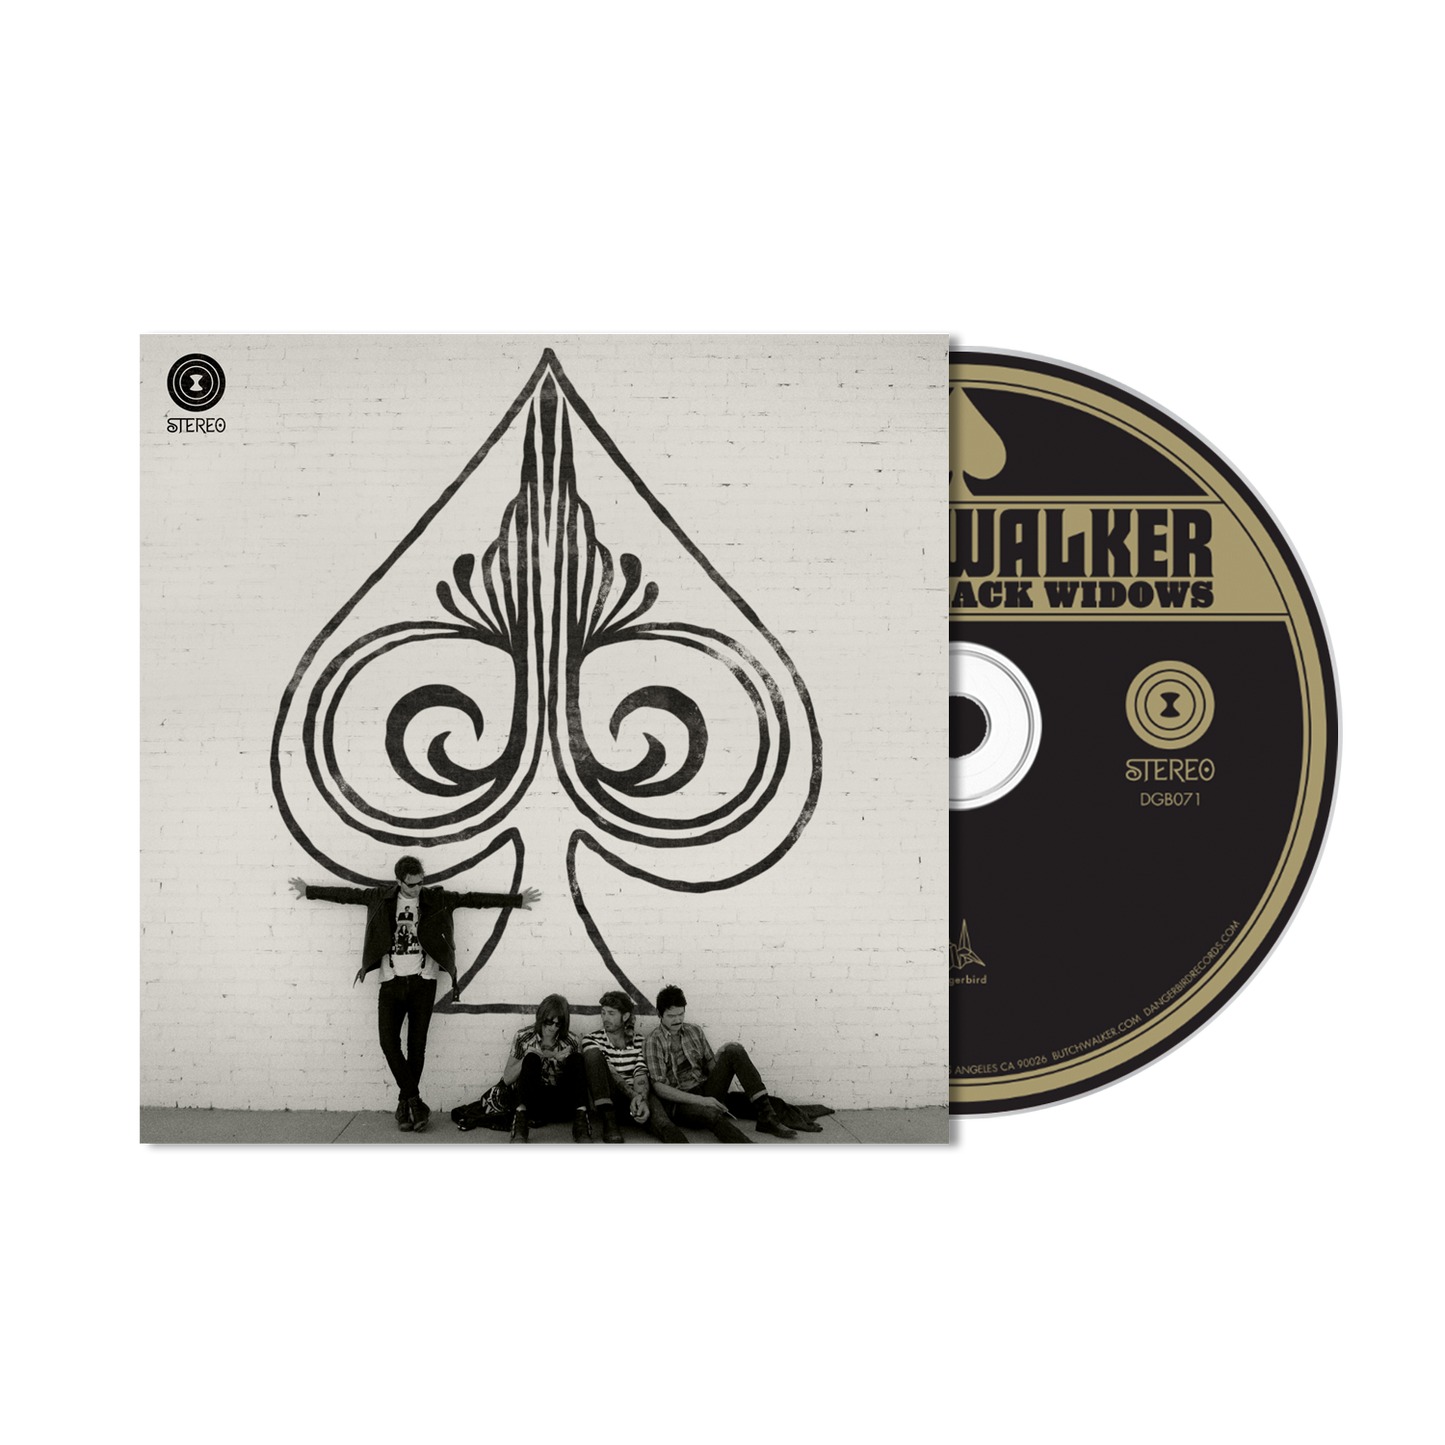 Butch Walker & The Black Widows - The Spade - CD